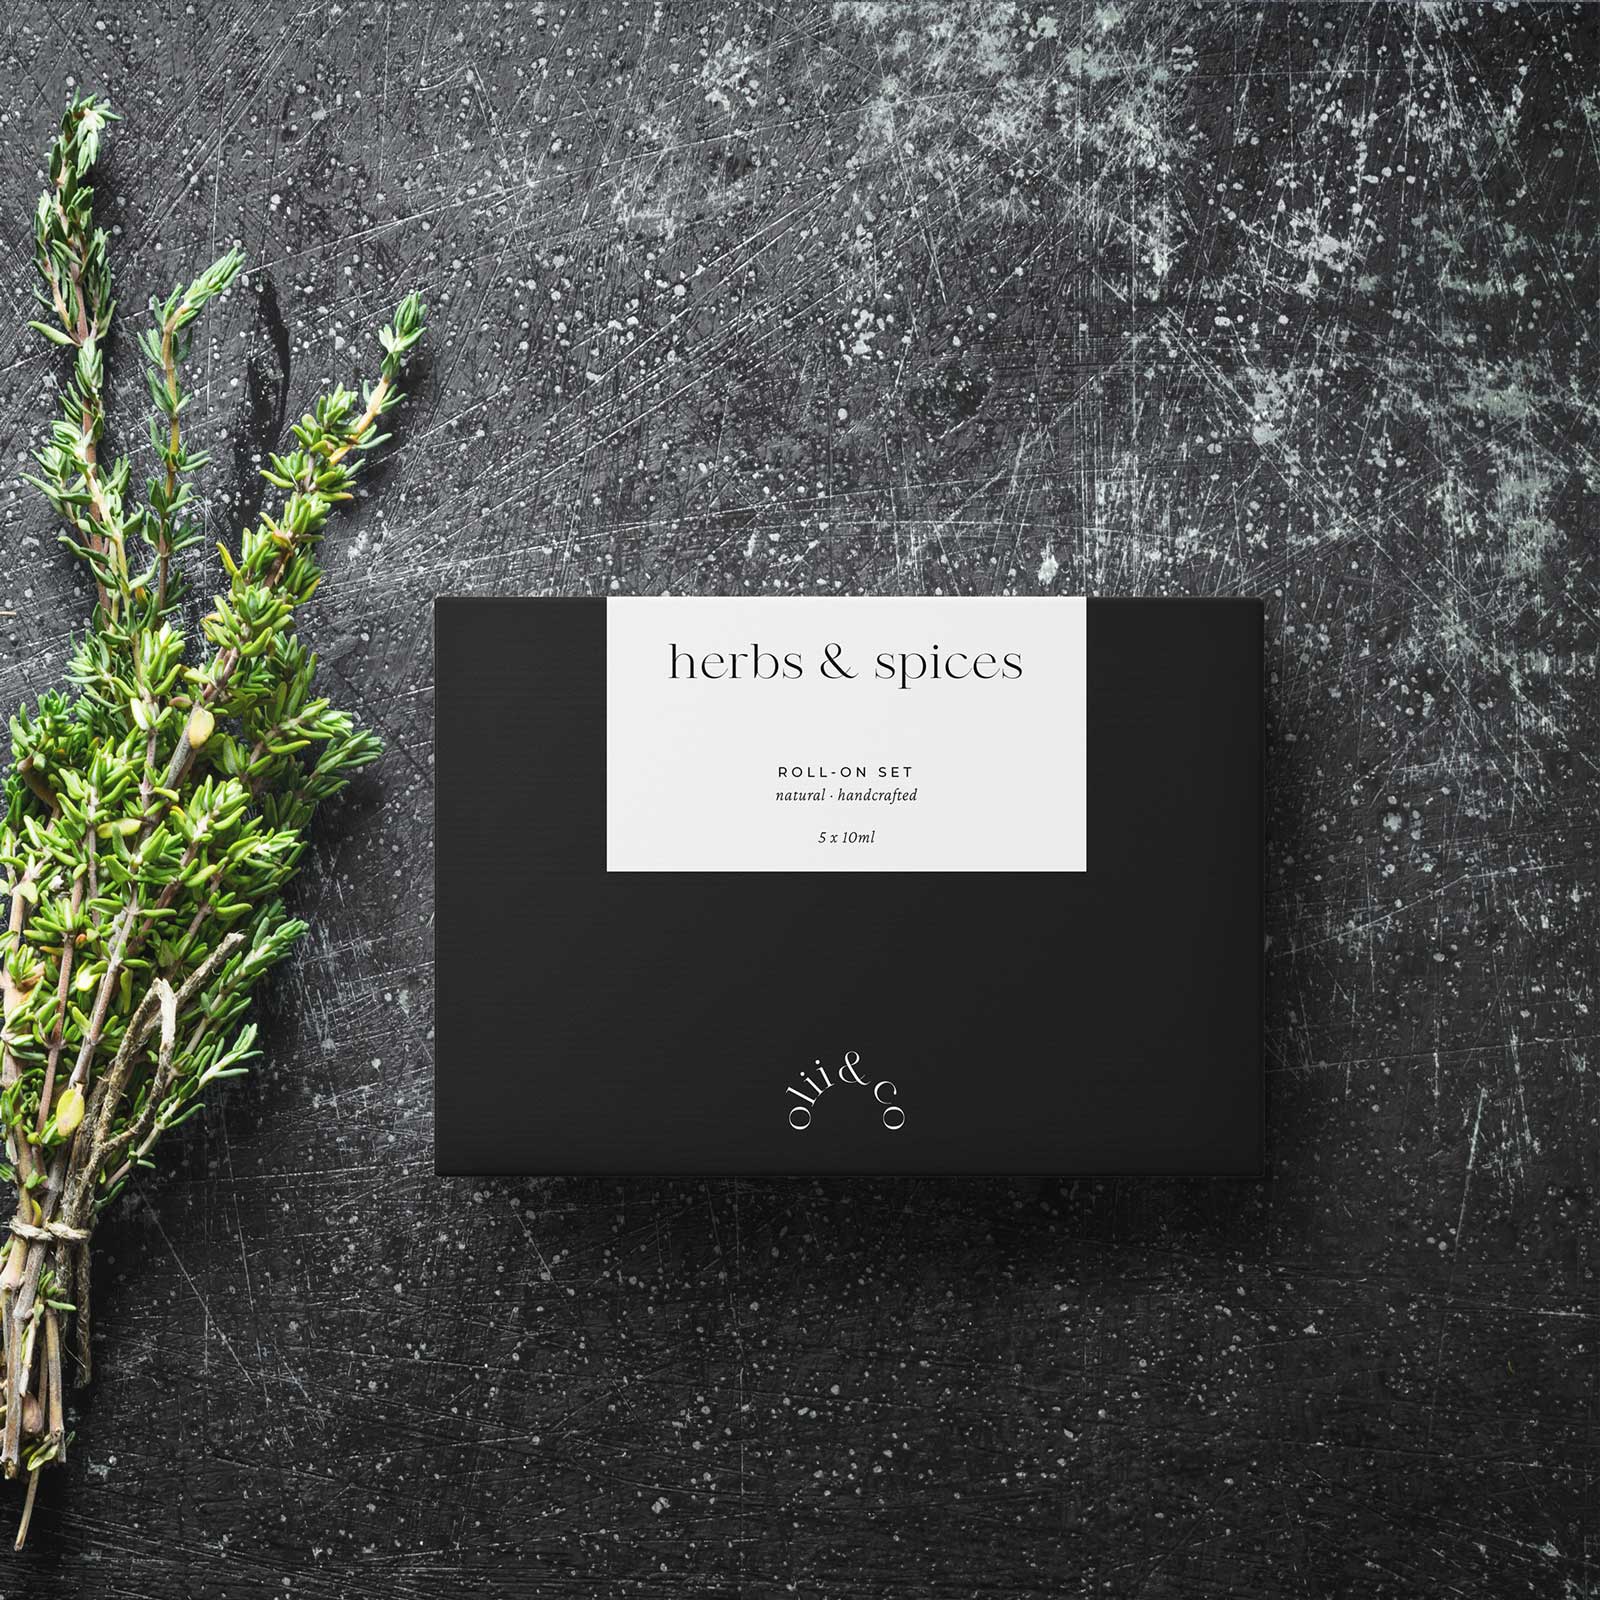 Karolina Król Studio minimalist brand and sustainable packaging design for essential oils 